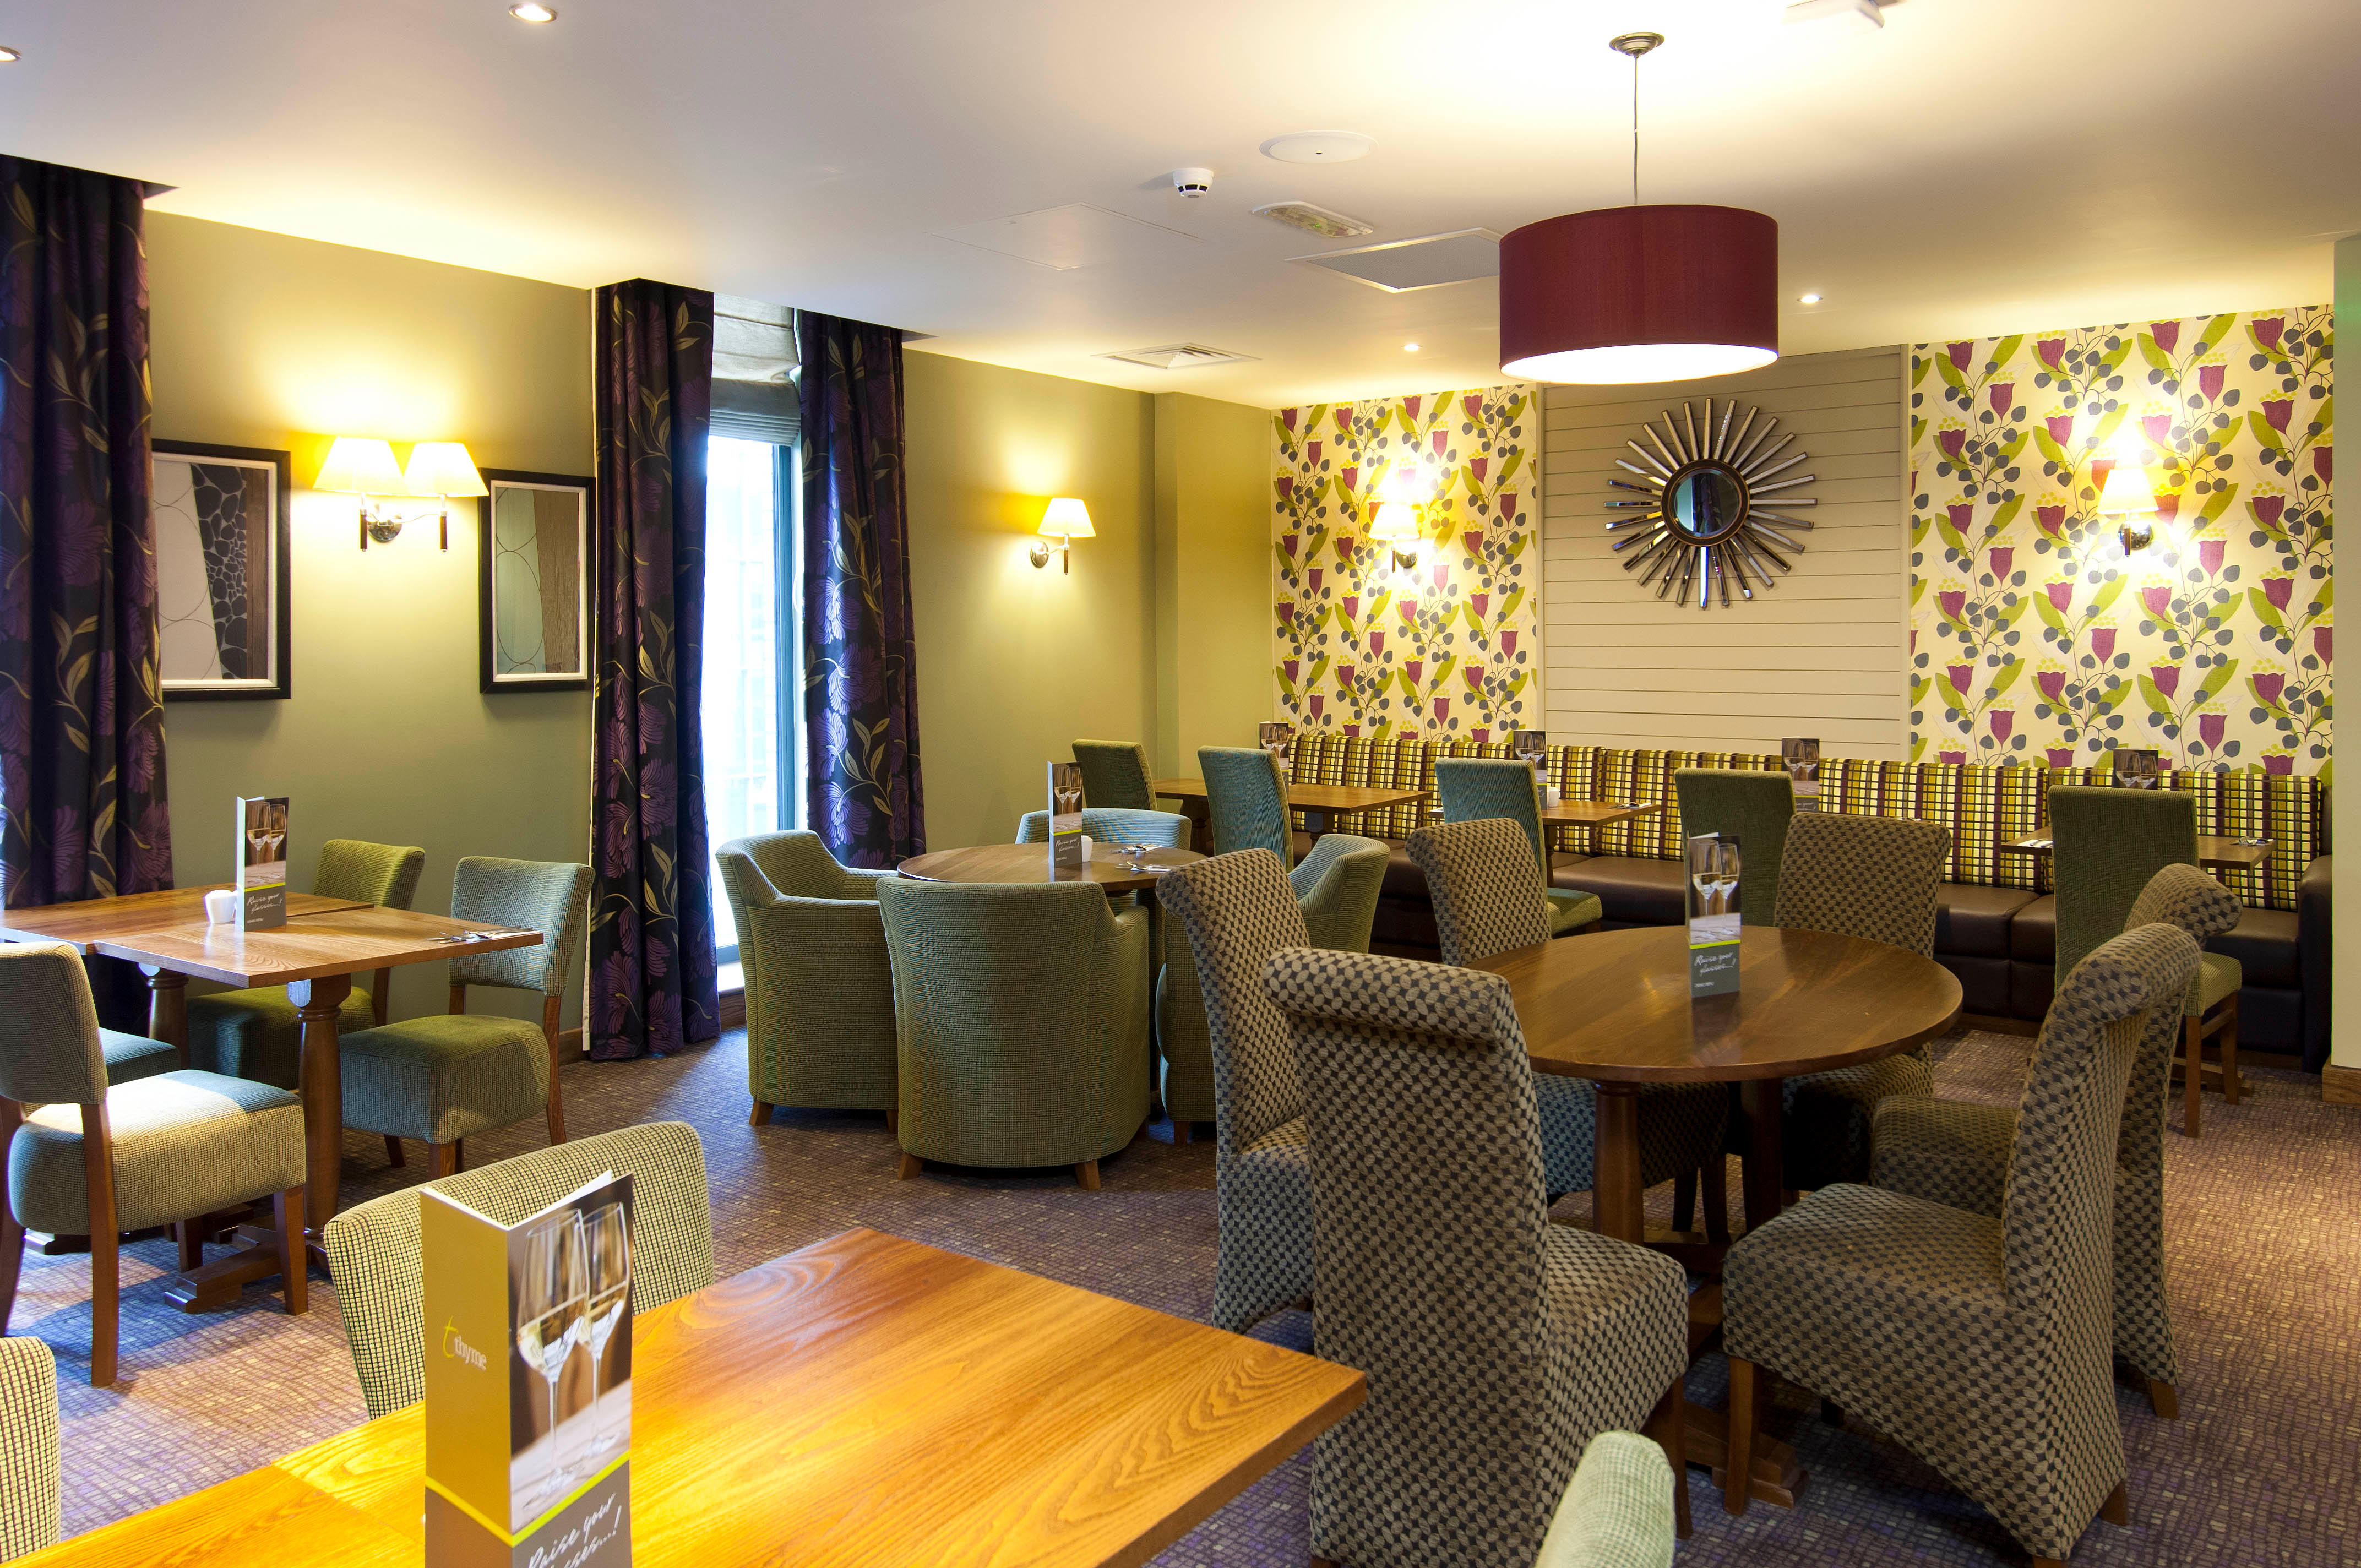 Thyme restaurant Premier Inn Liverpool City Centre (Liverpool One) hotel Liverpool 03333 219282